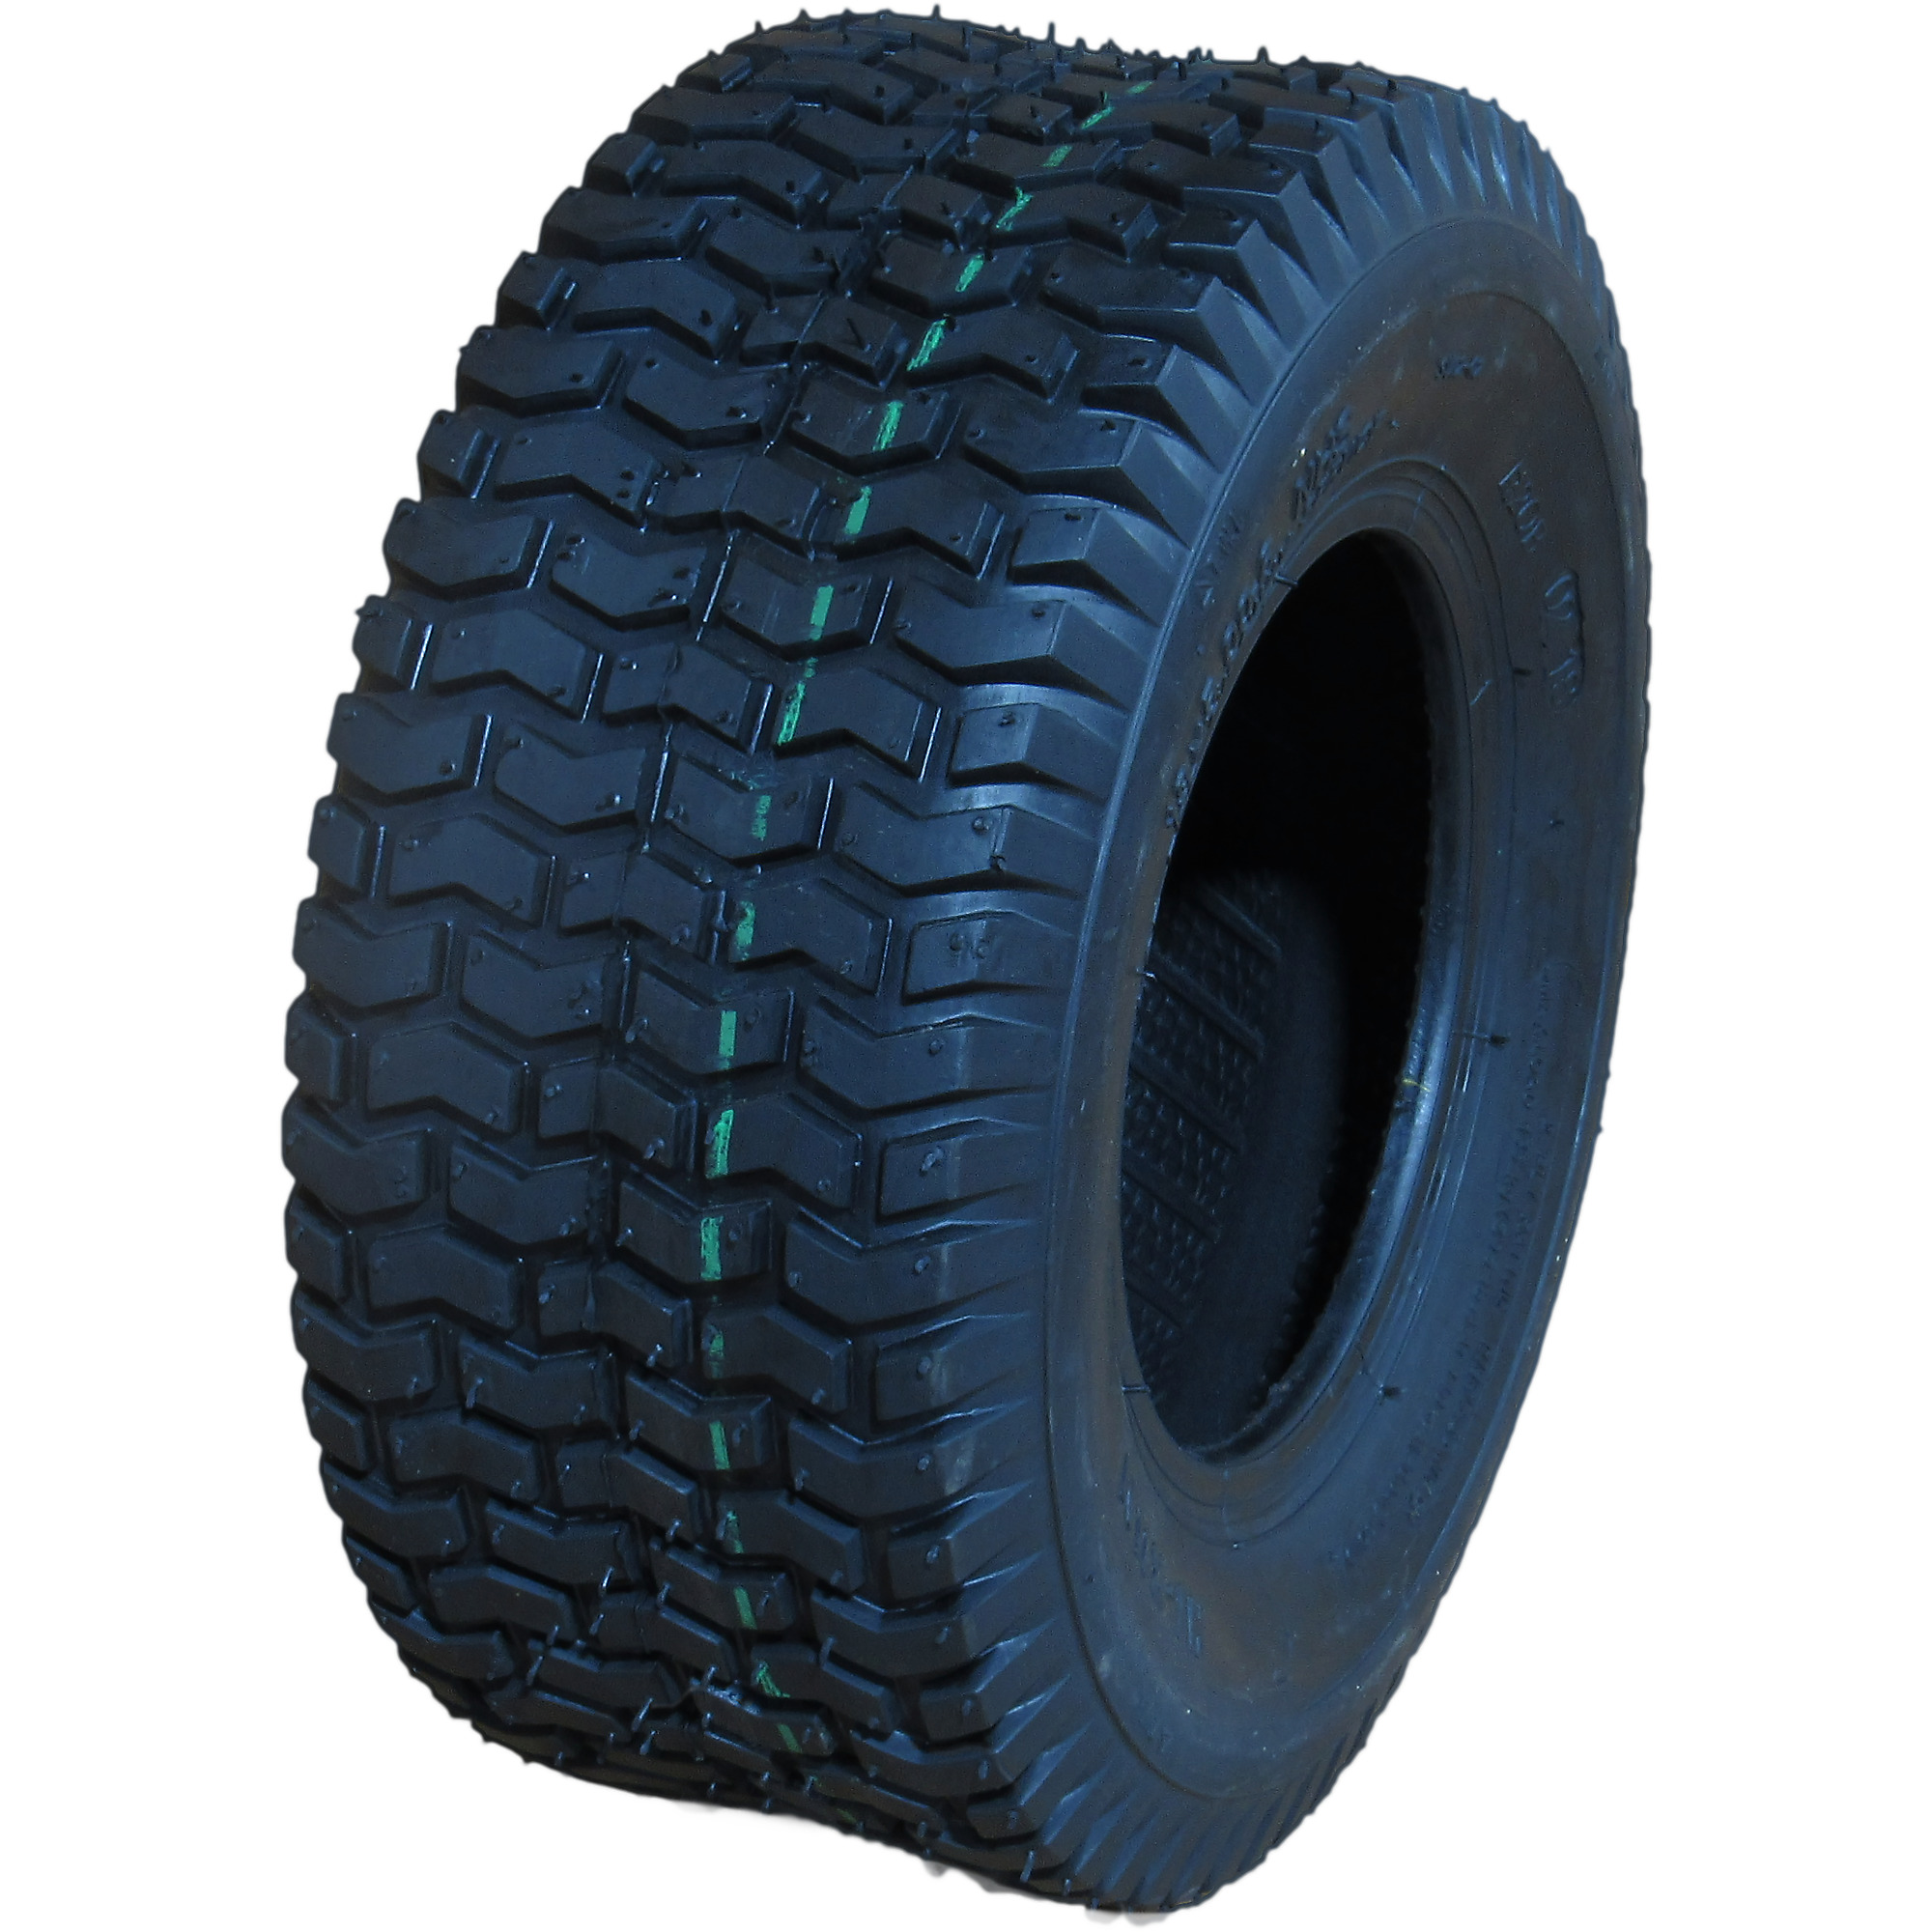 HI-RUN, Lawn Garden Tire, SU12 Turf II, Tire Size 13X5.00-6 Load Range Rating A, Model WD1093